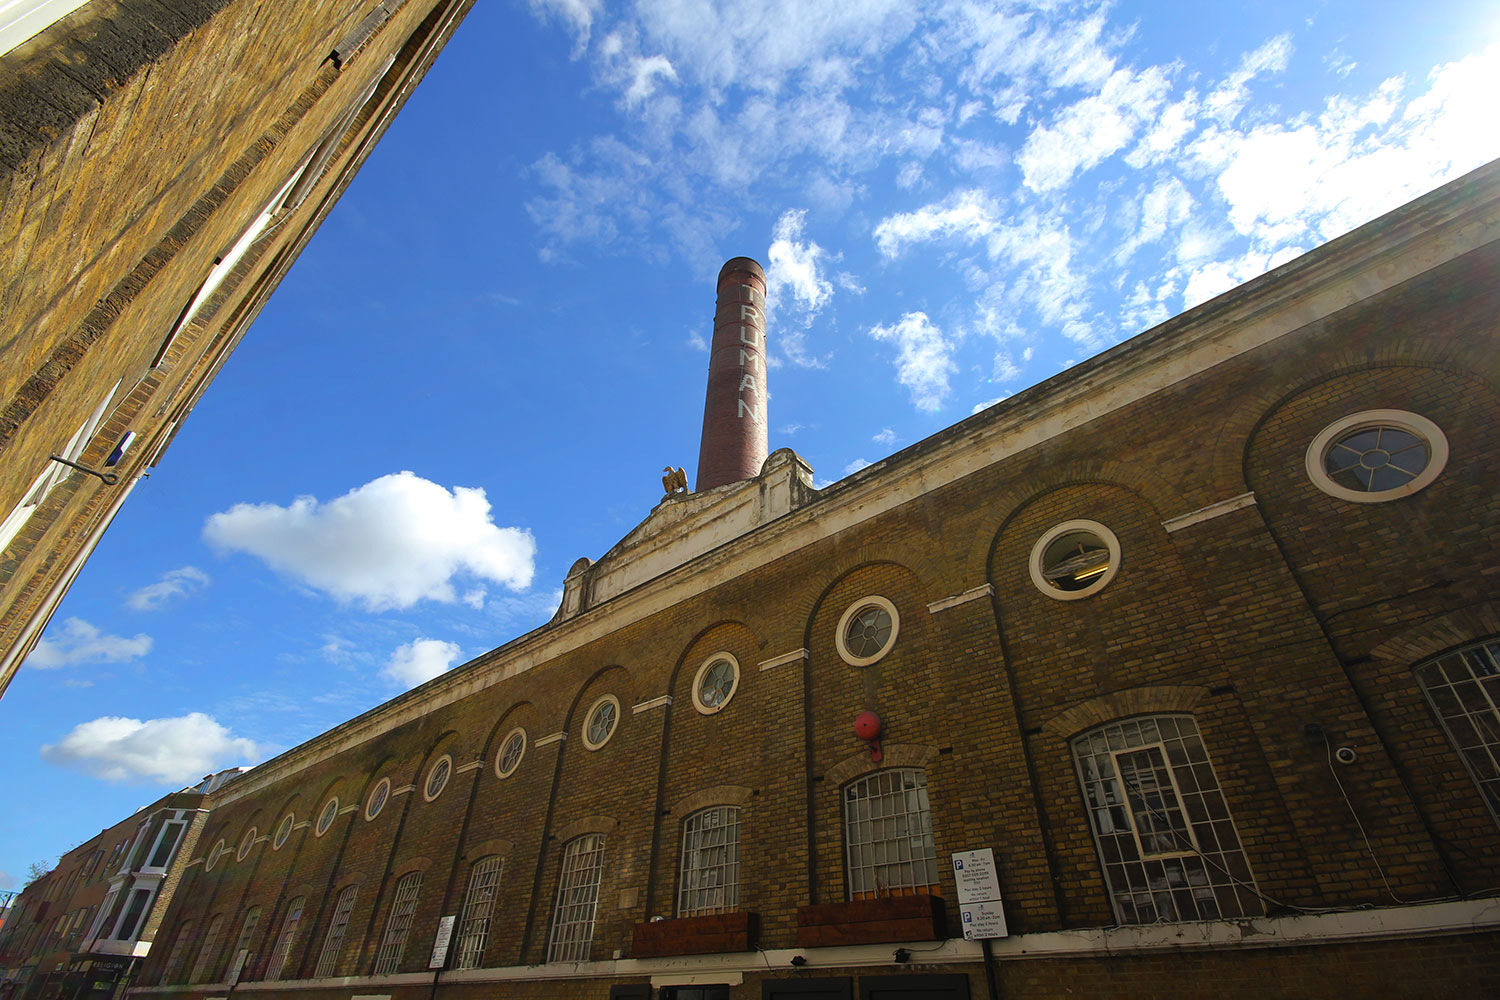 The Truman Brewery, Brick Lane, East London, Spitalfields